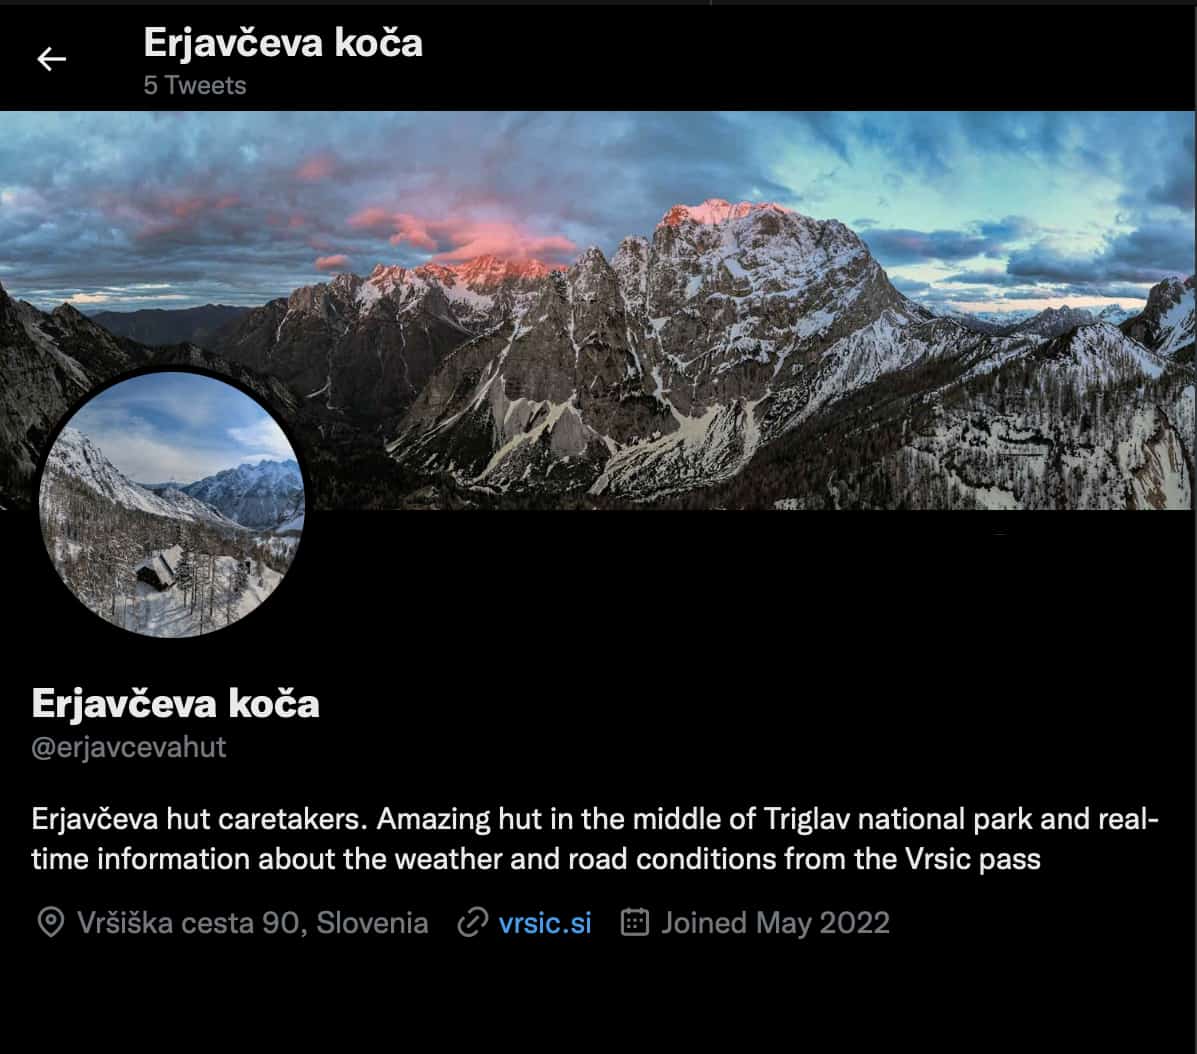 Erjavčeva's mountain hut Twitter account